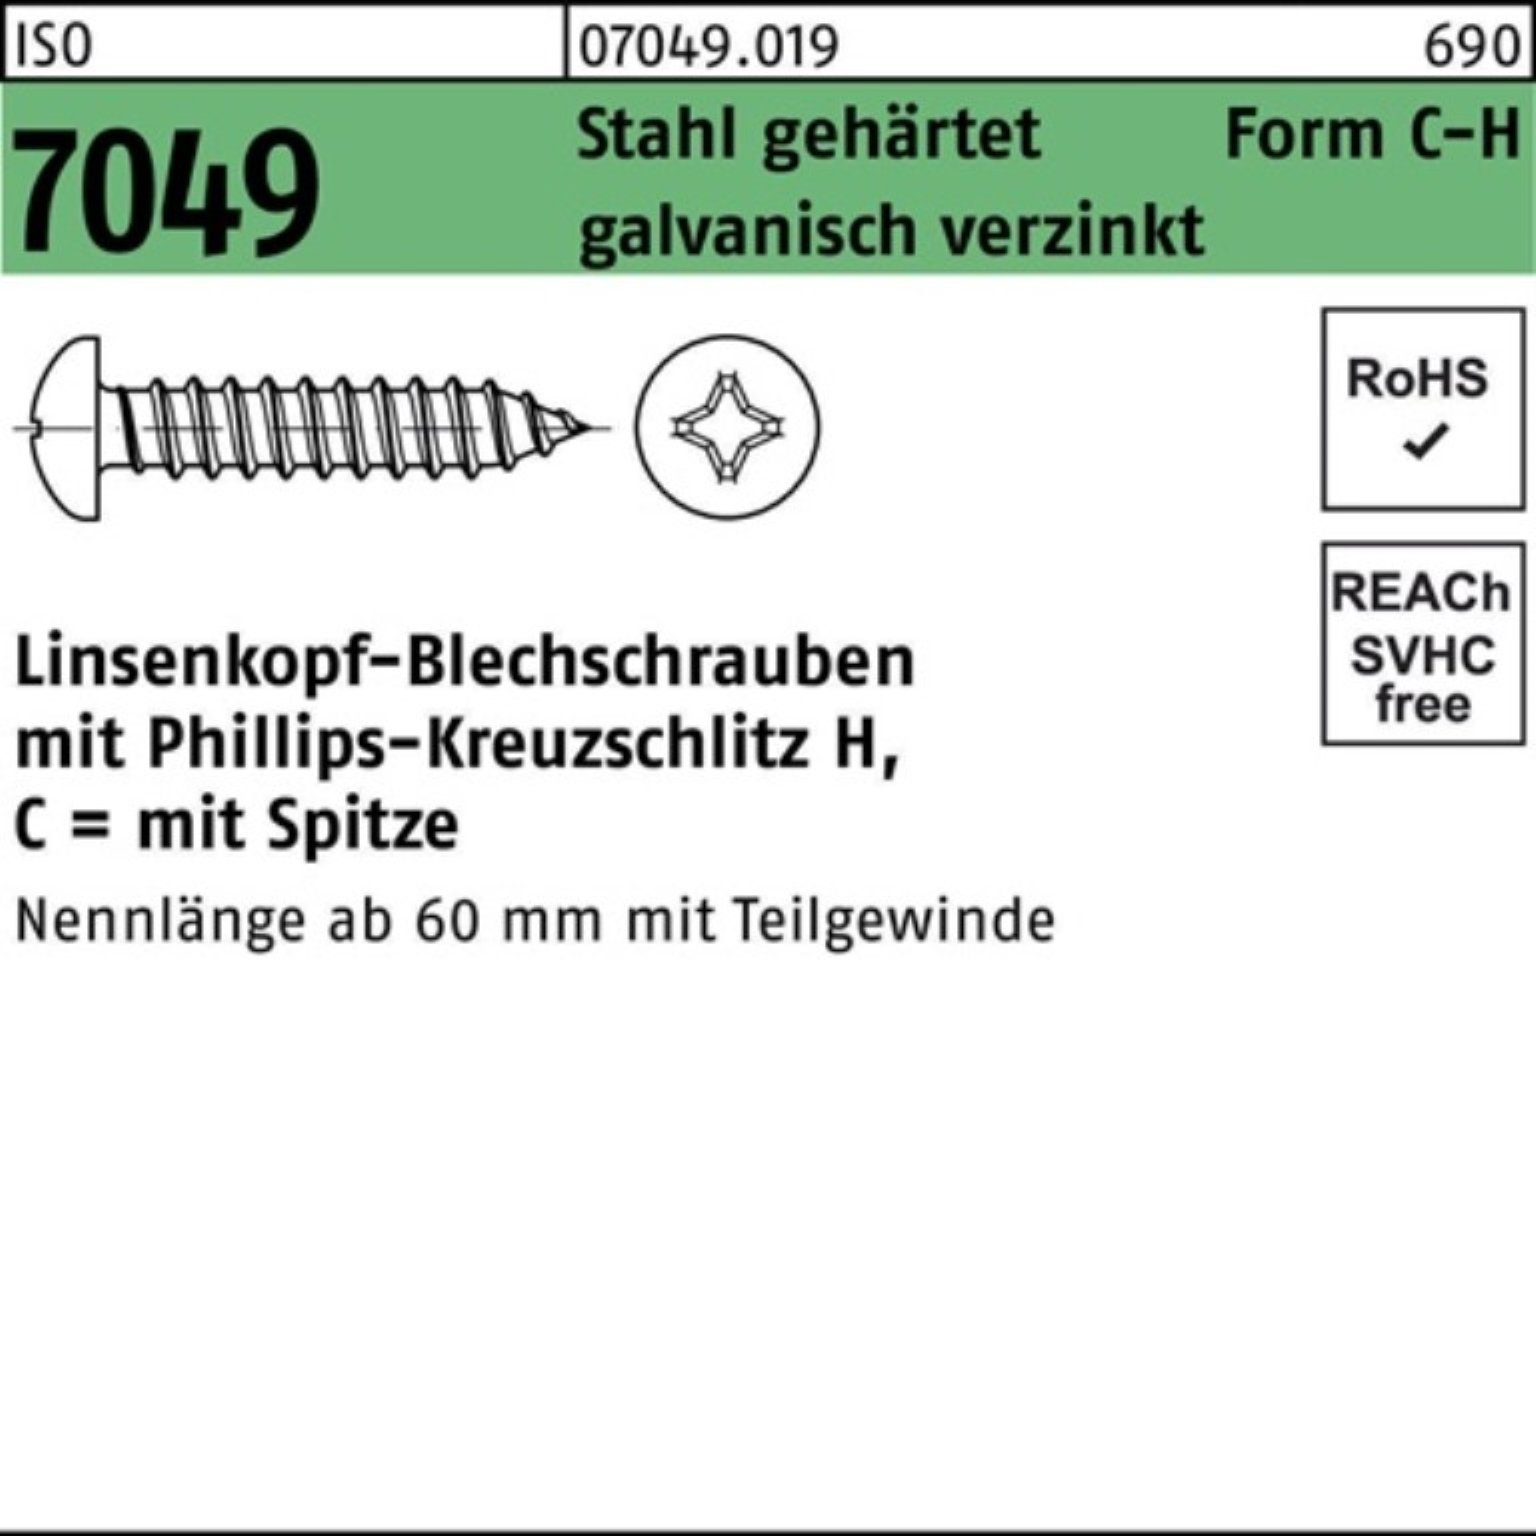 C5,5x60-H Reyher gehä ISO 250er Spitze/PH LIKO Pack 7049 Blechschraube Blechschraube Stahl